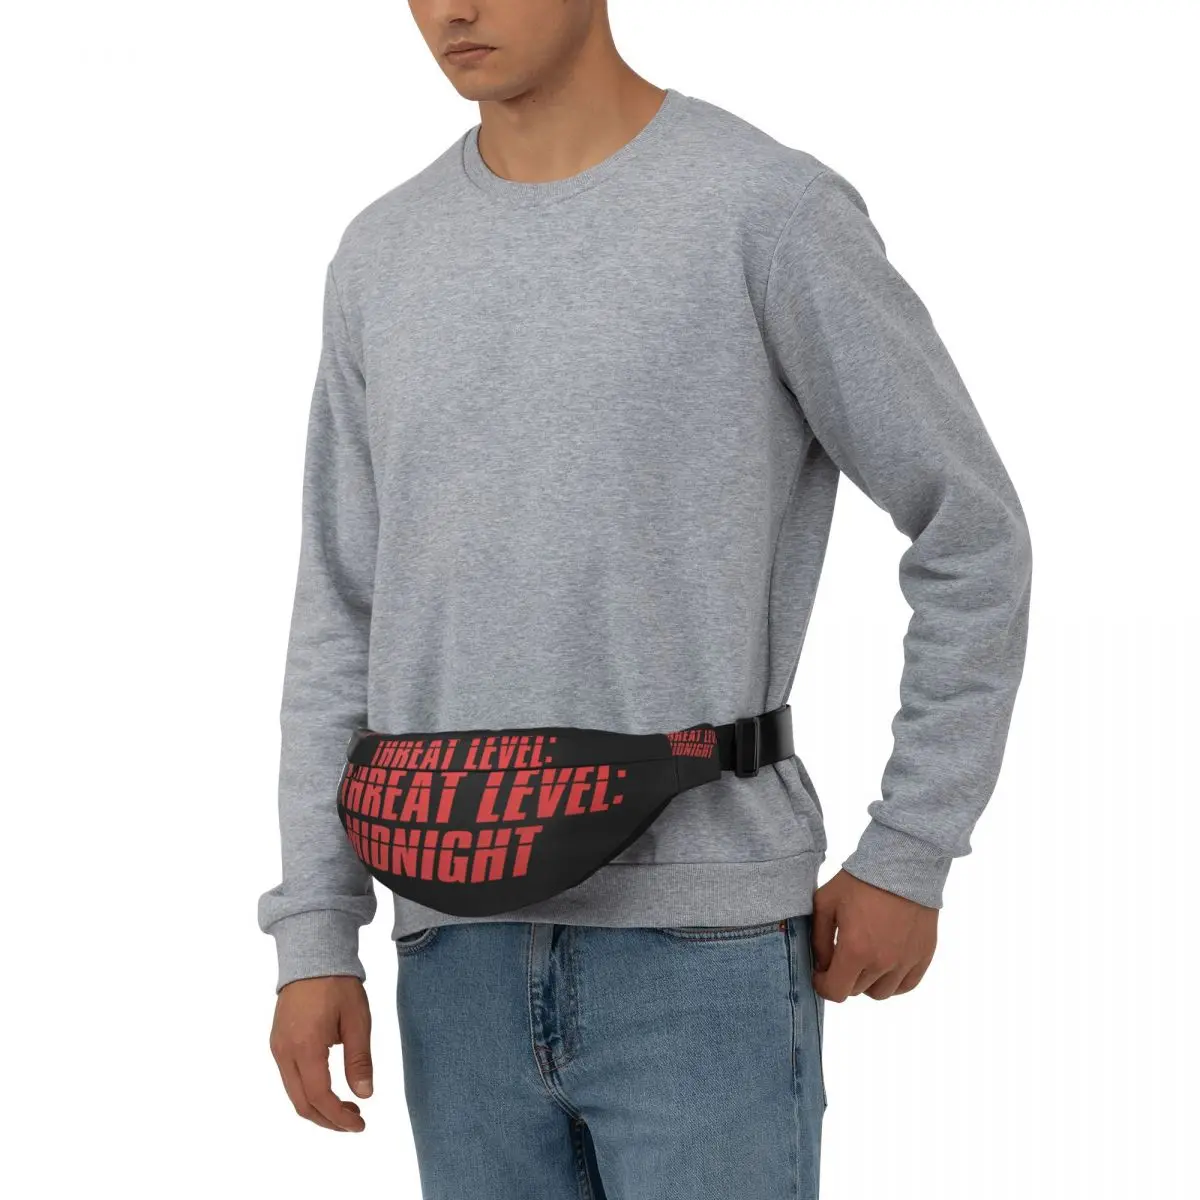 Threat Level Midnight - The Office Unisex Waist Bag Multifunction Sling Crossbody Bags Chest Bags Short Trip Waist Pack